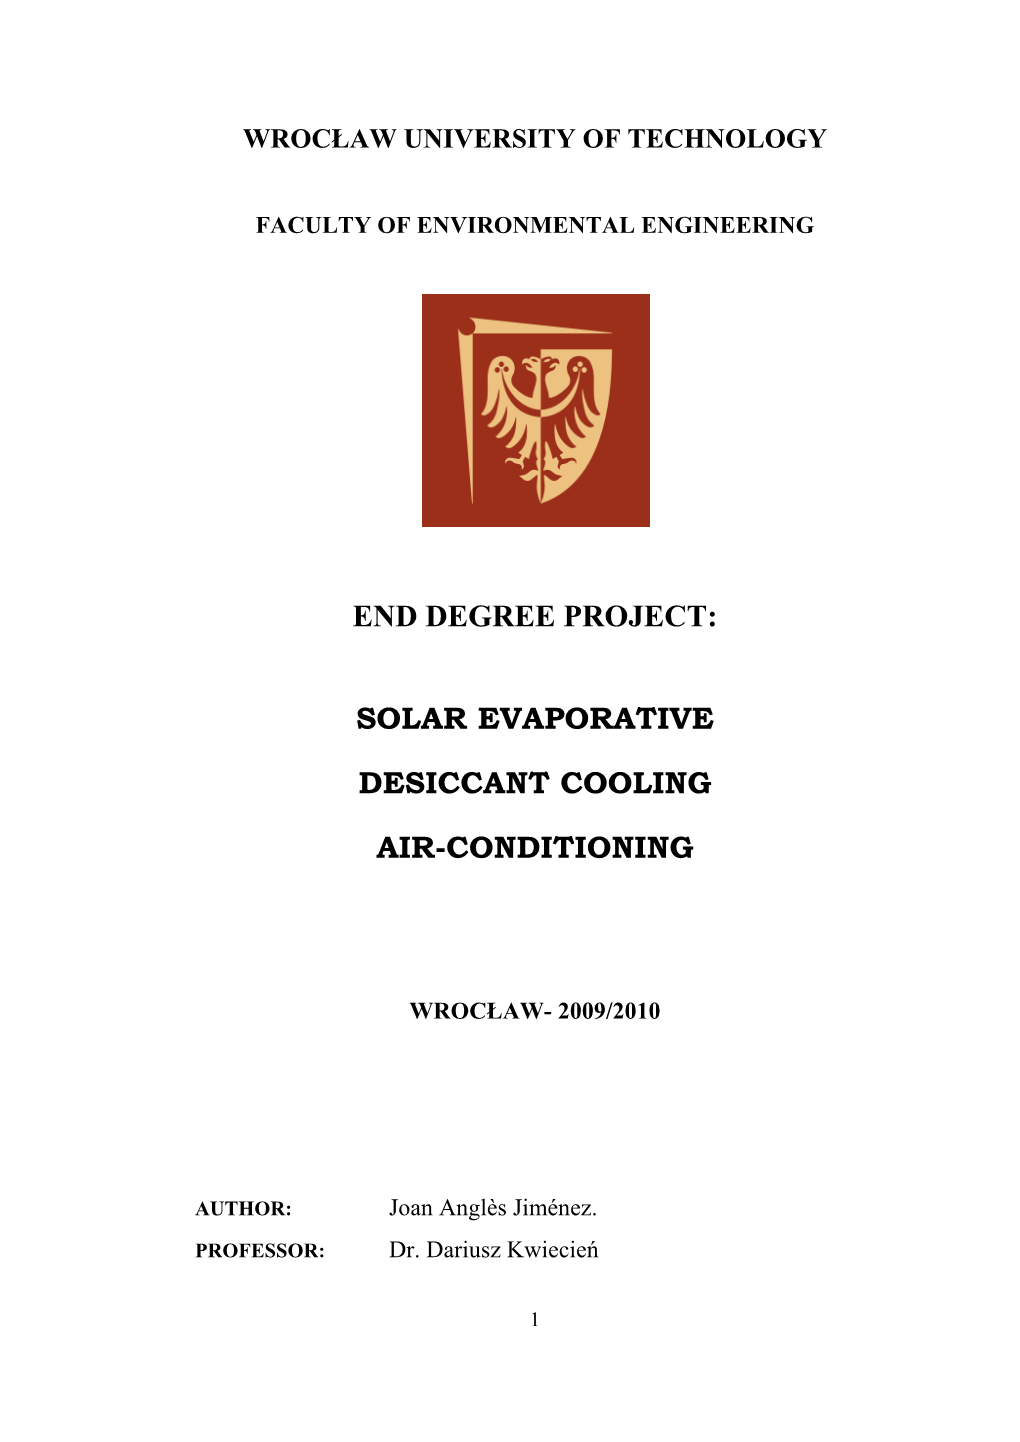 Solar Evaporative Desiccant Cooling Air-Conditioning